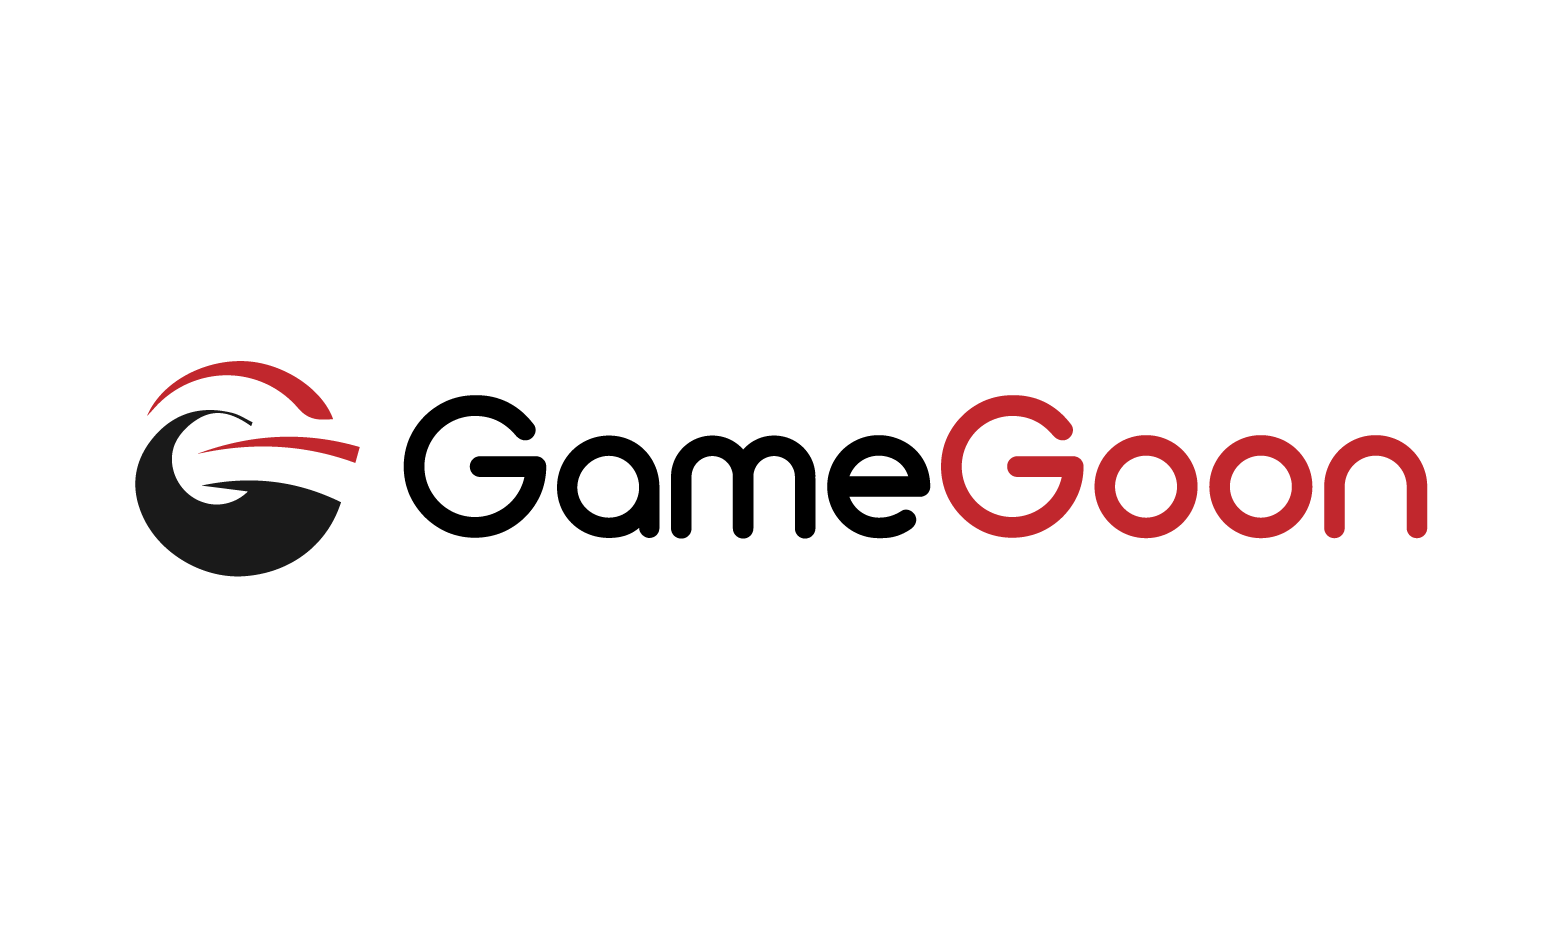 GameGoon.com - Creative brandable domain for sale